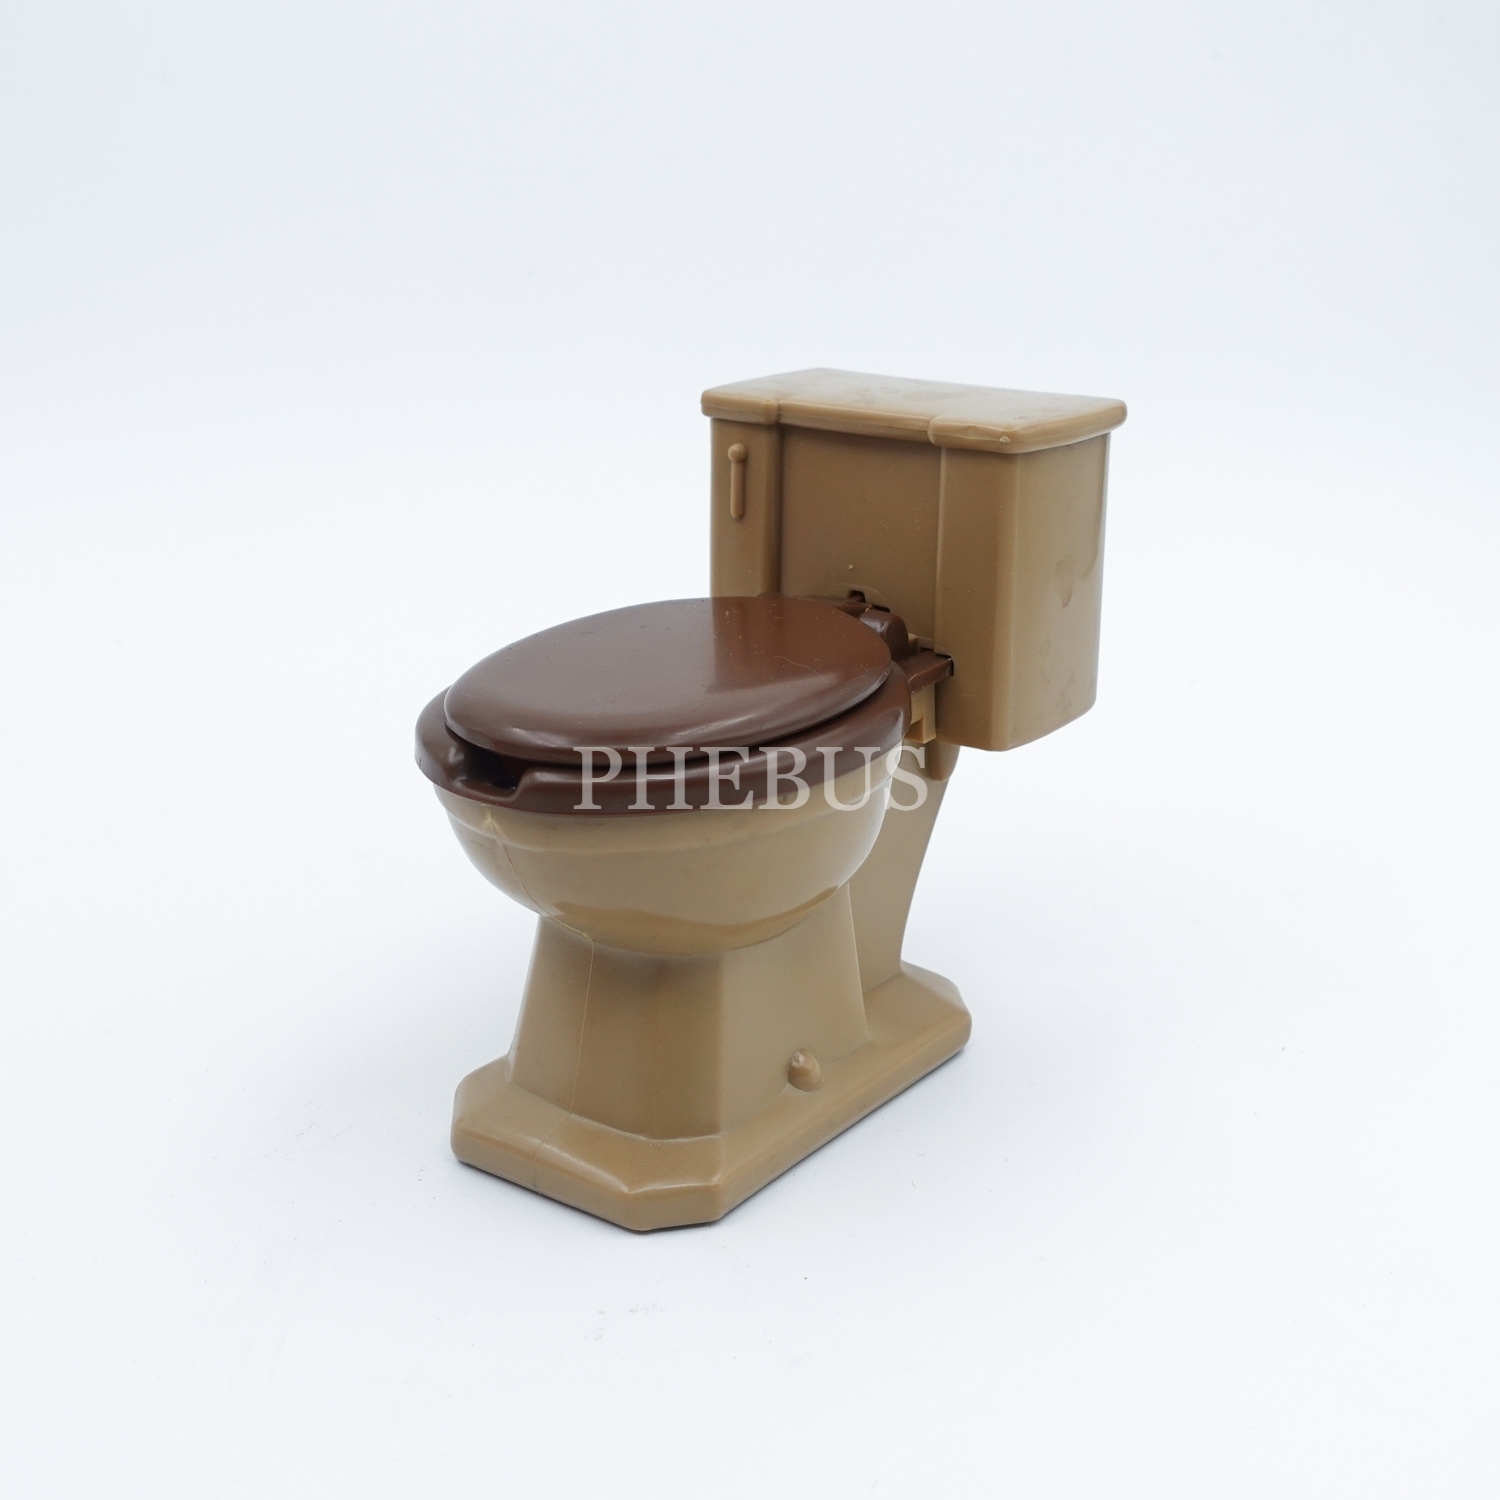 Artful Toilet, klozet formunda su fışkırtan şaka oyuncağı, kutusuyla birlikte 11x10x6 cm...